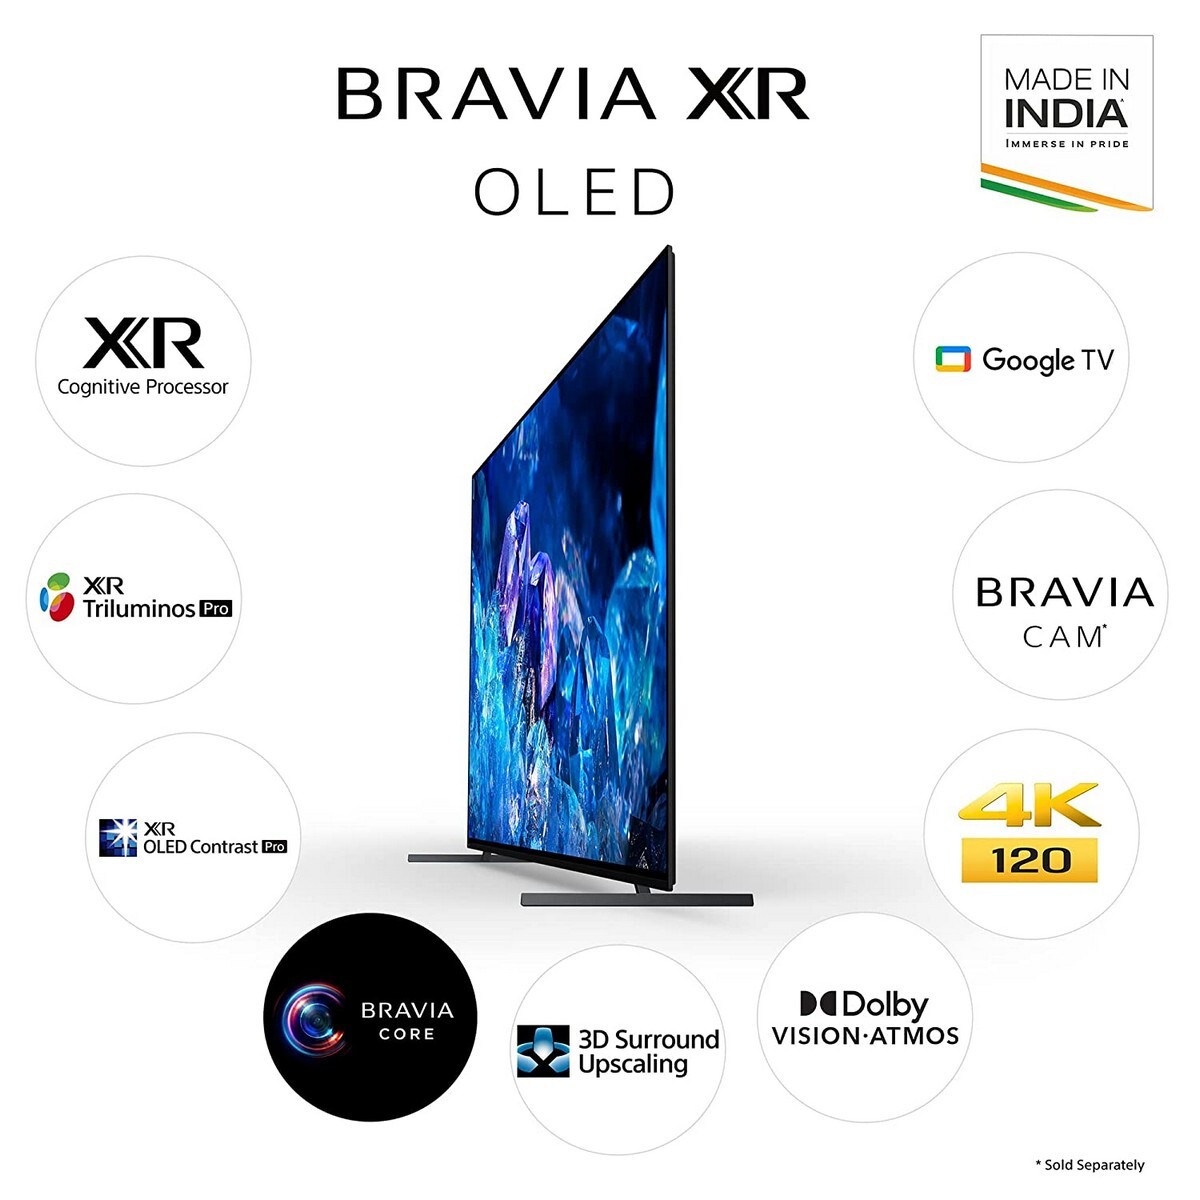 Sony Bravia 4K Ultra HD Smart OLED Google TV XR-55A80K 55"